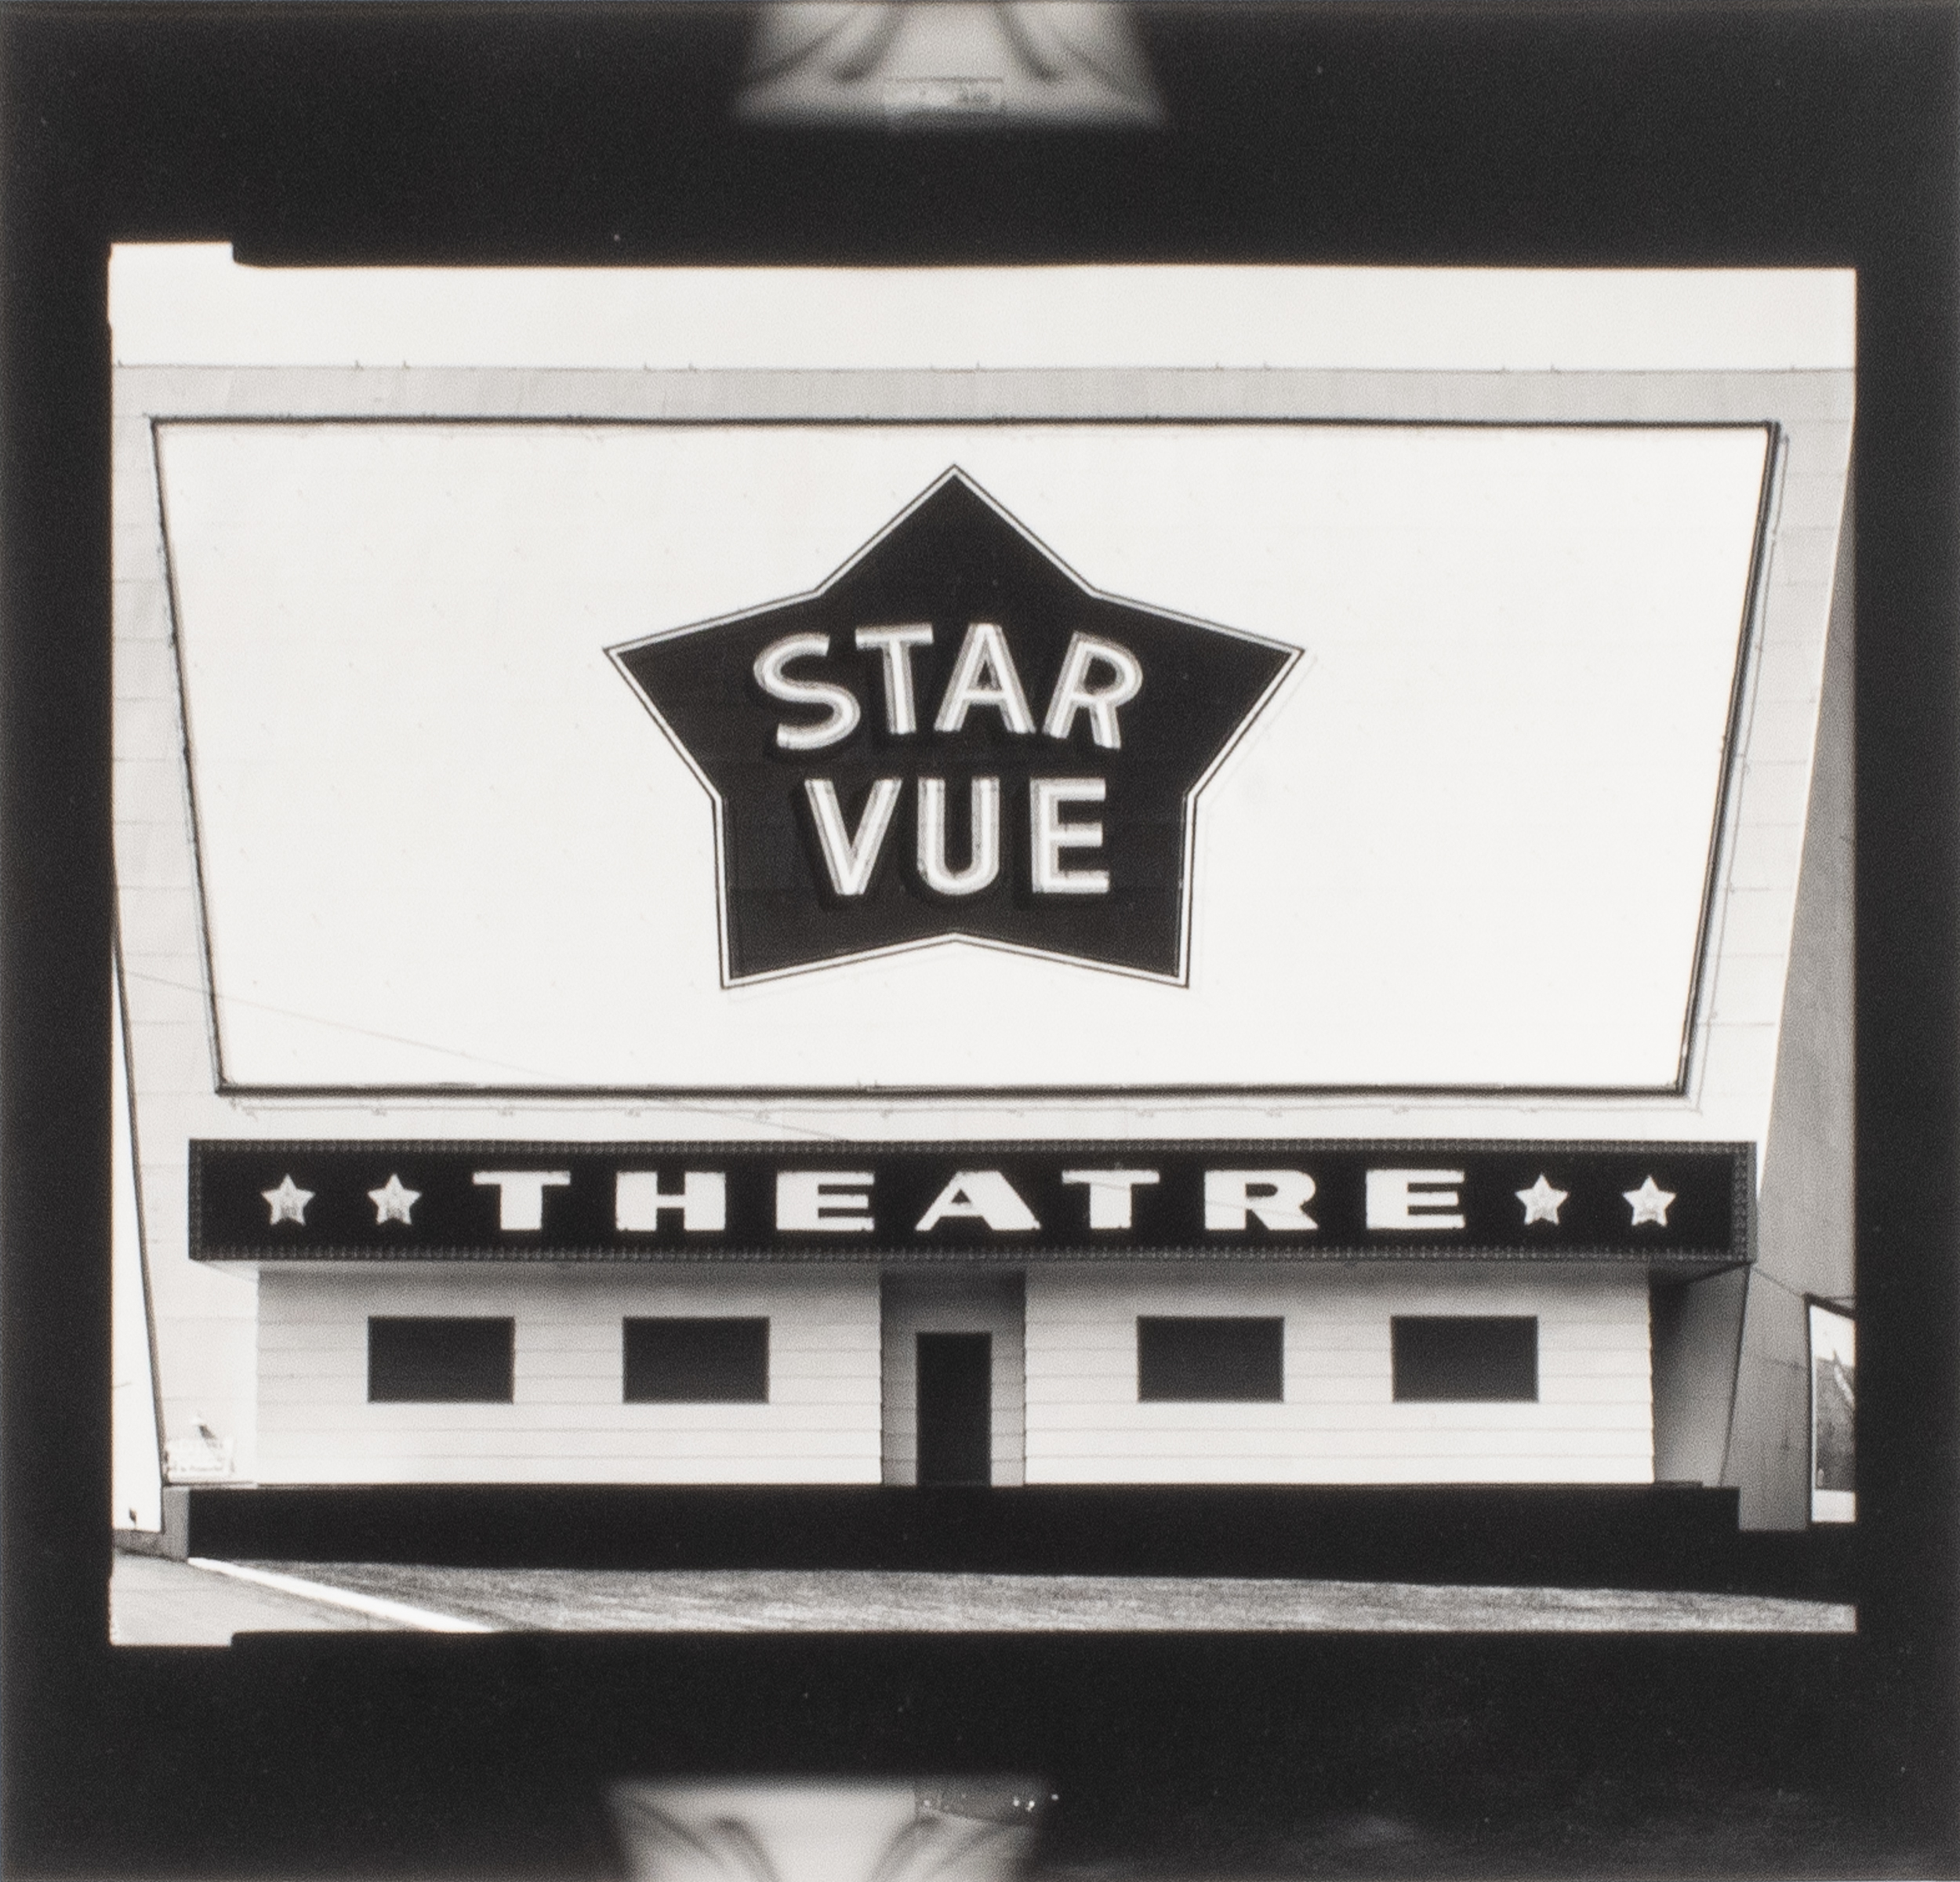 JIM DOW "STAR VUE THEATRE, 1973"